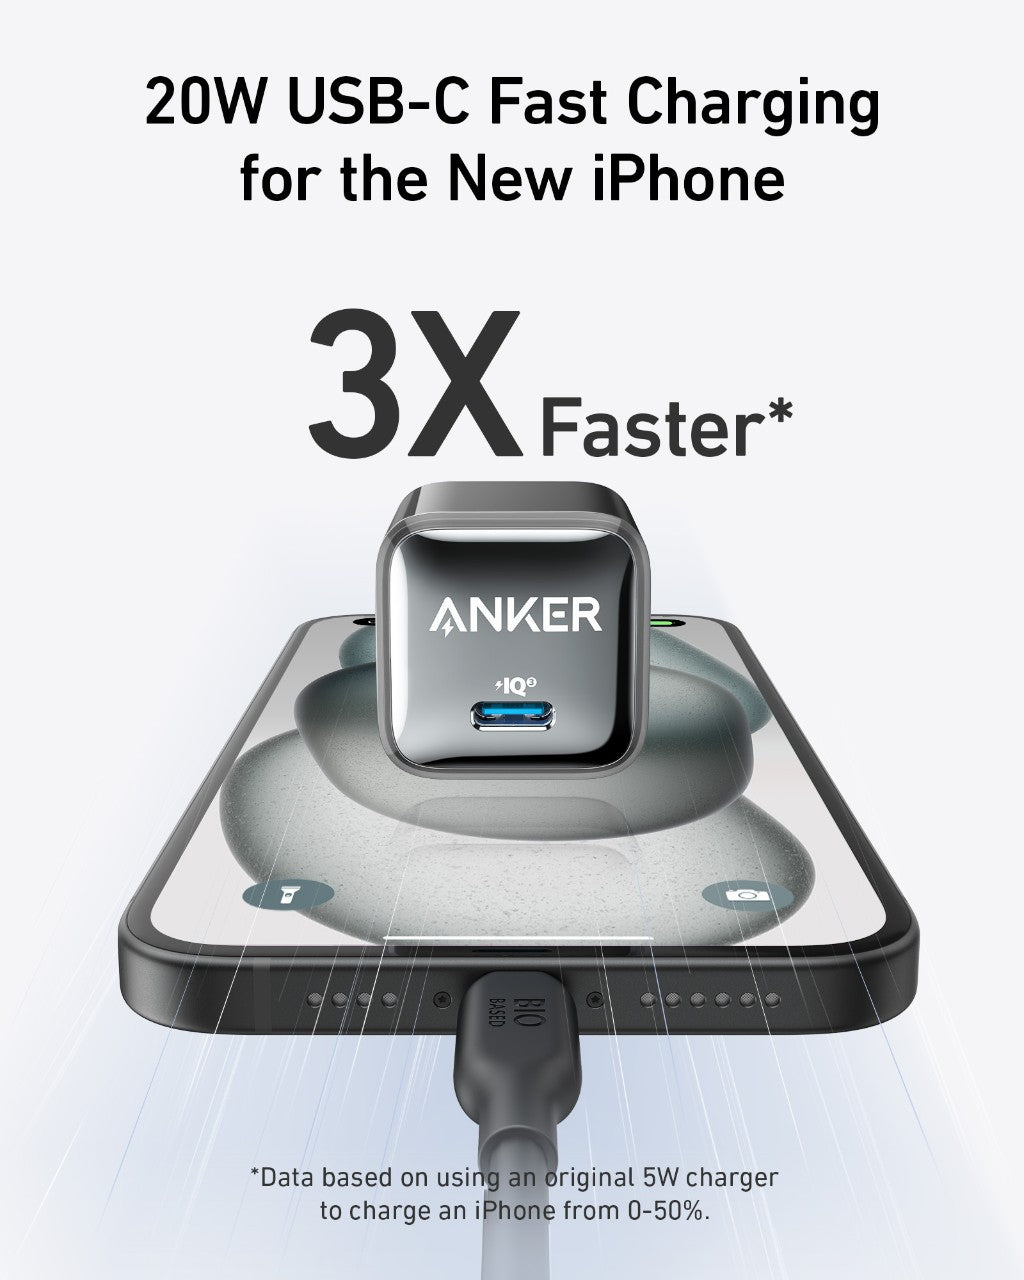 Anker 511 Charger (Nano Pro) - Anker US